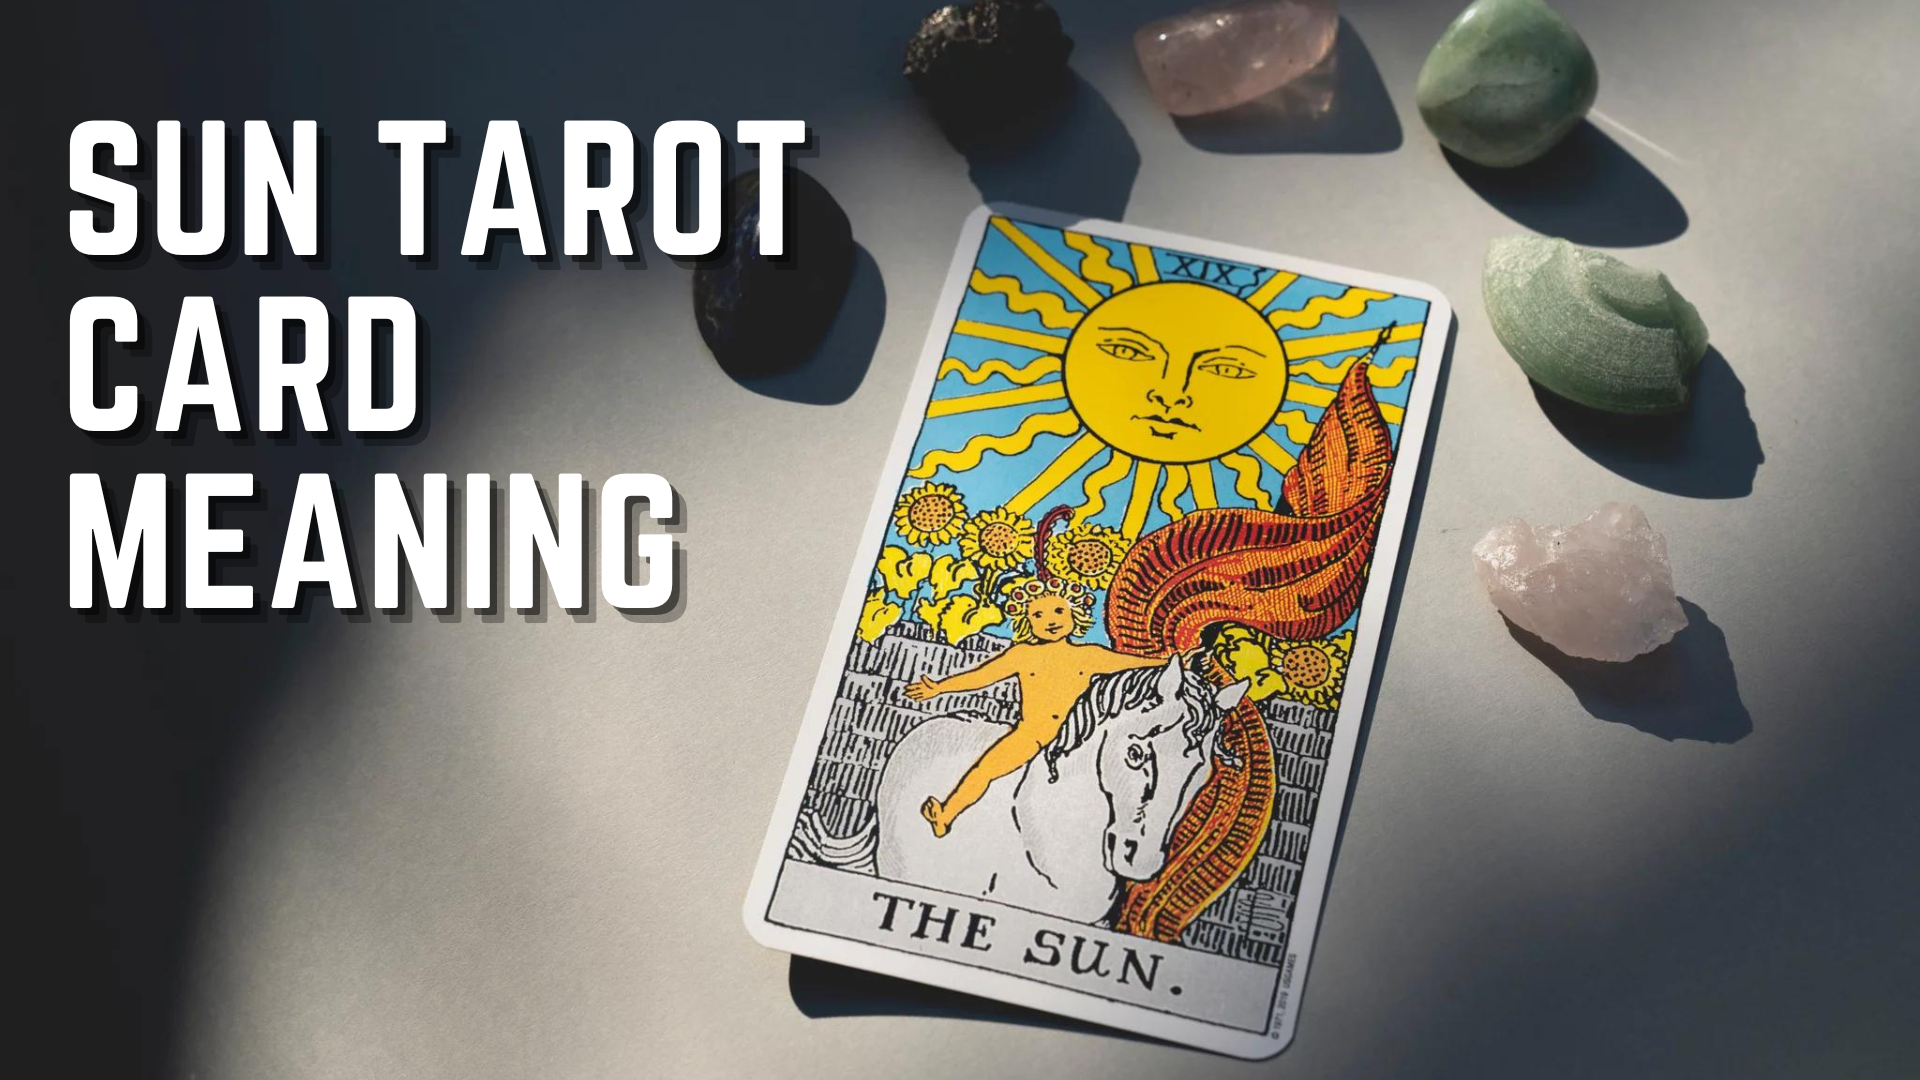 Sun Tarot Card Meaning - A Life Full Of Joy And Energy